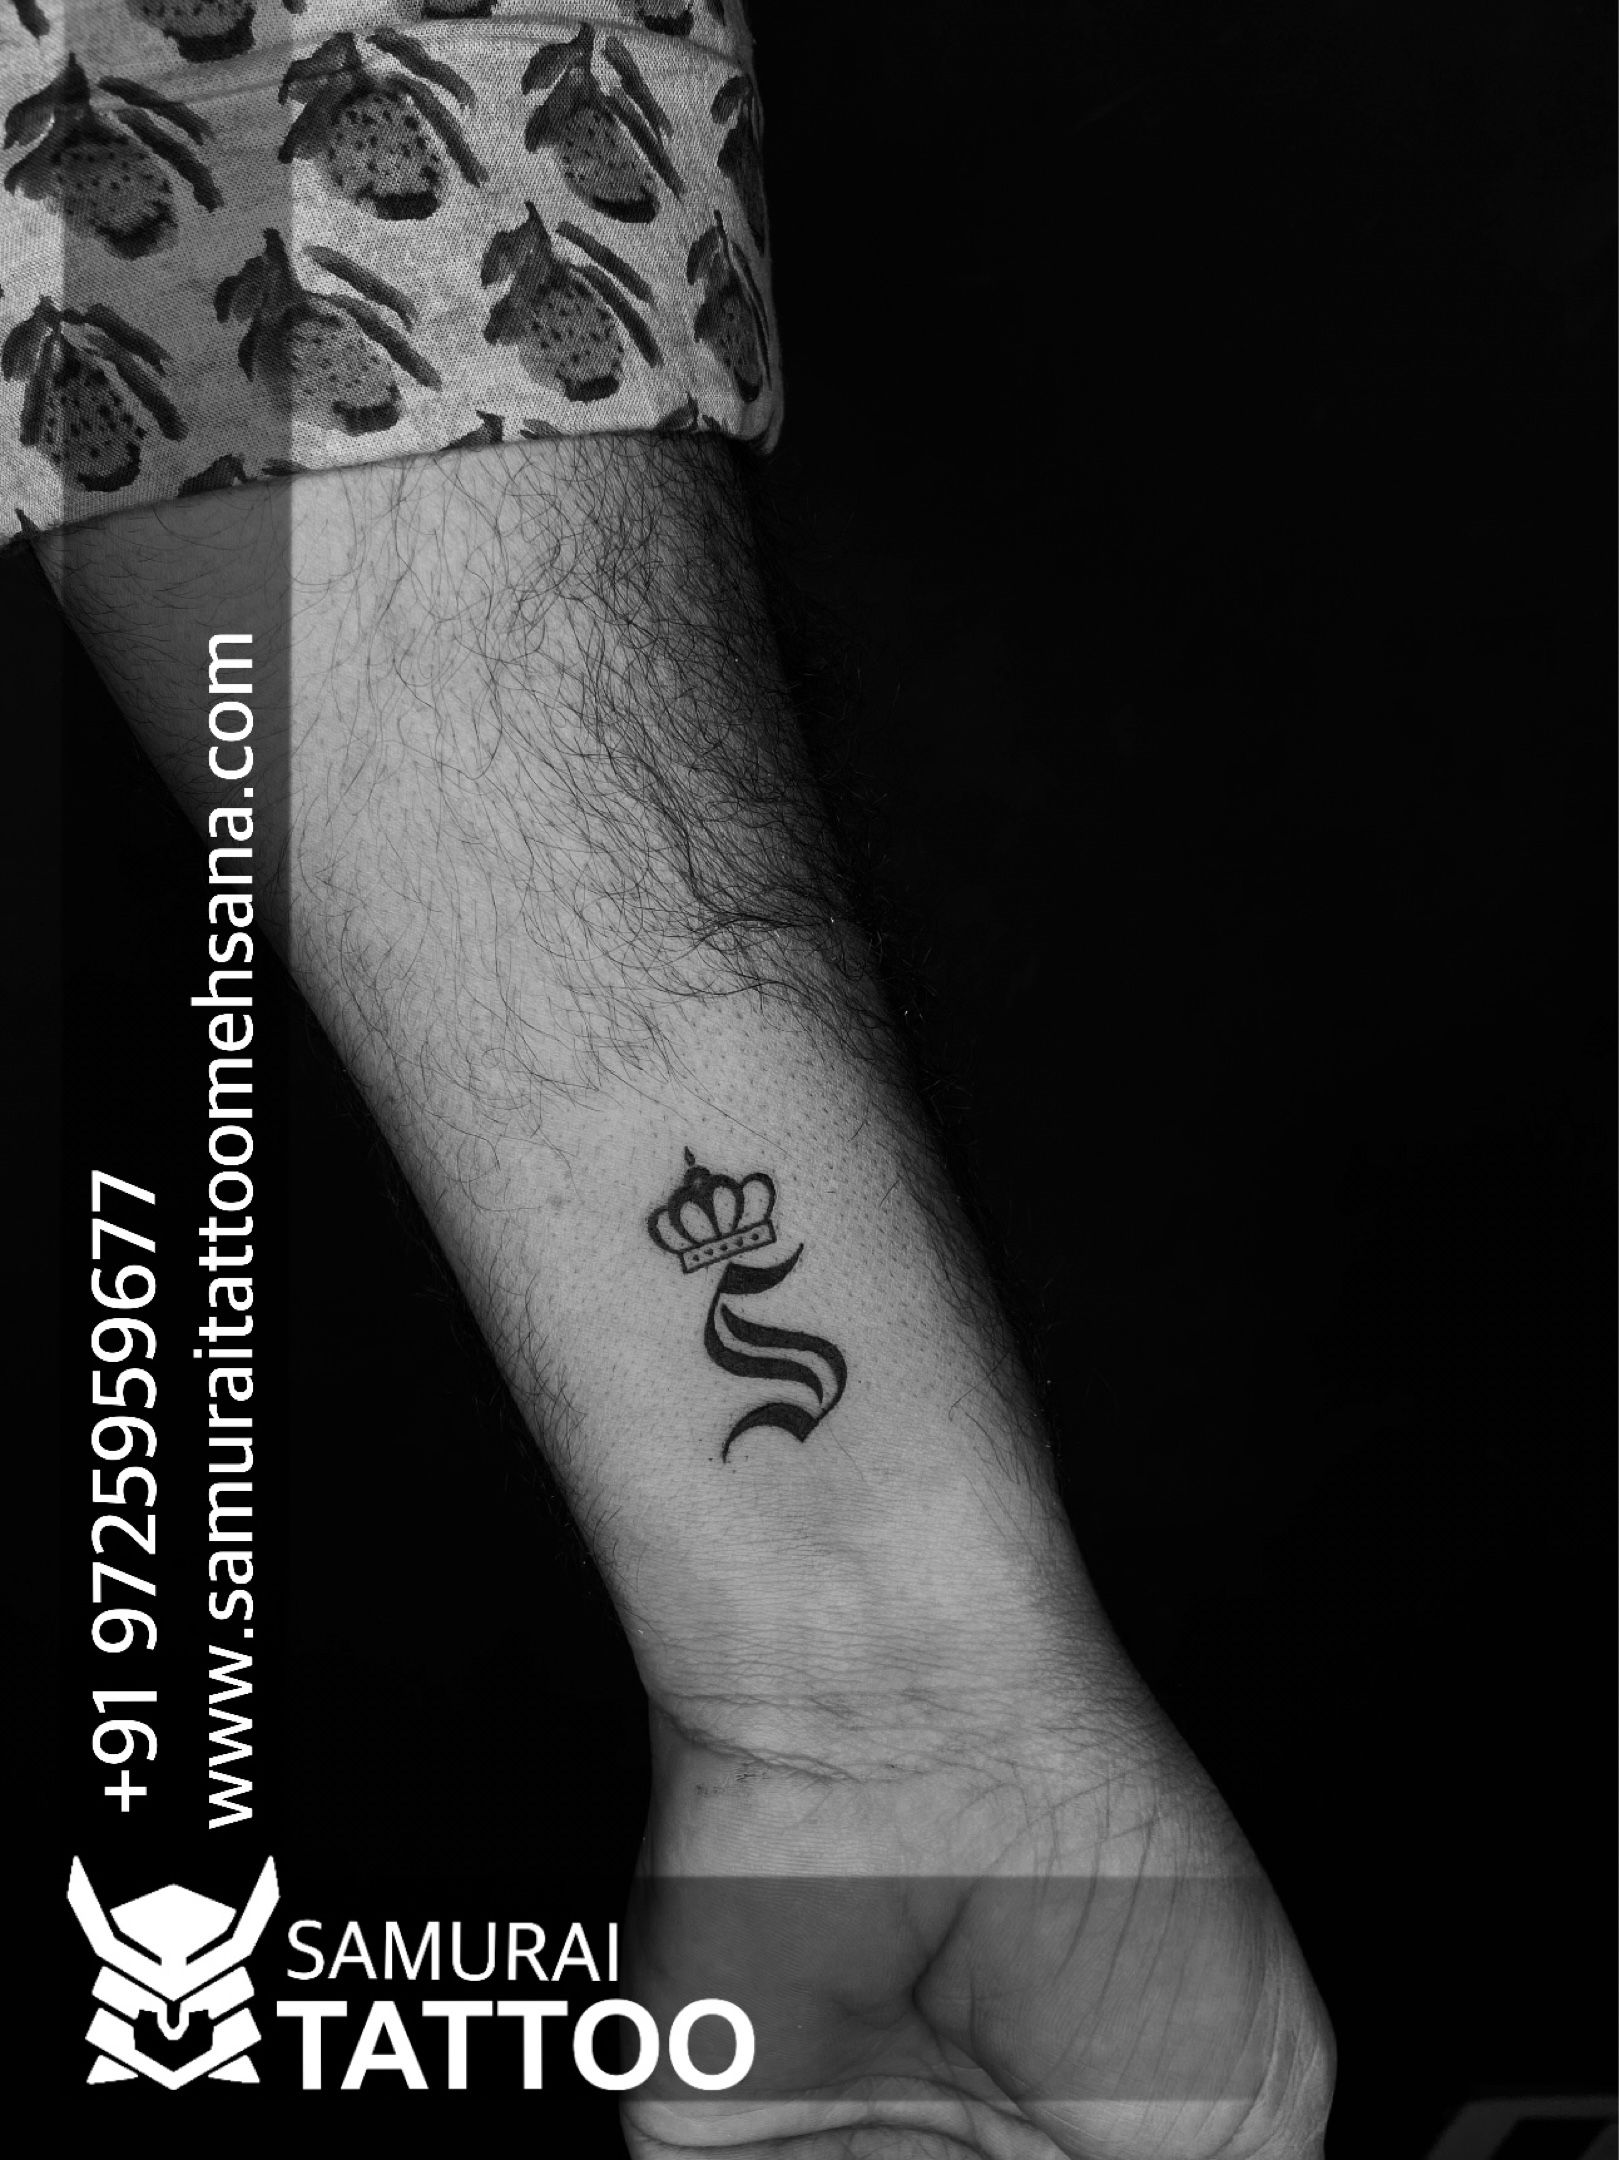 Voorkoms Name S Letter Body Temporary Tattoo Waterproof For Girls Men Women  11x6 cm : Amazon.in: Beauty